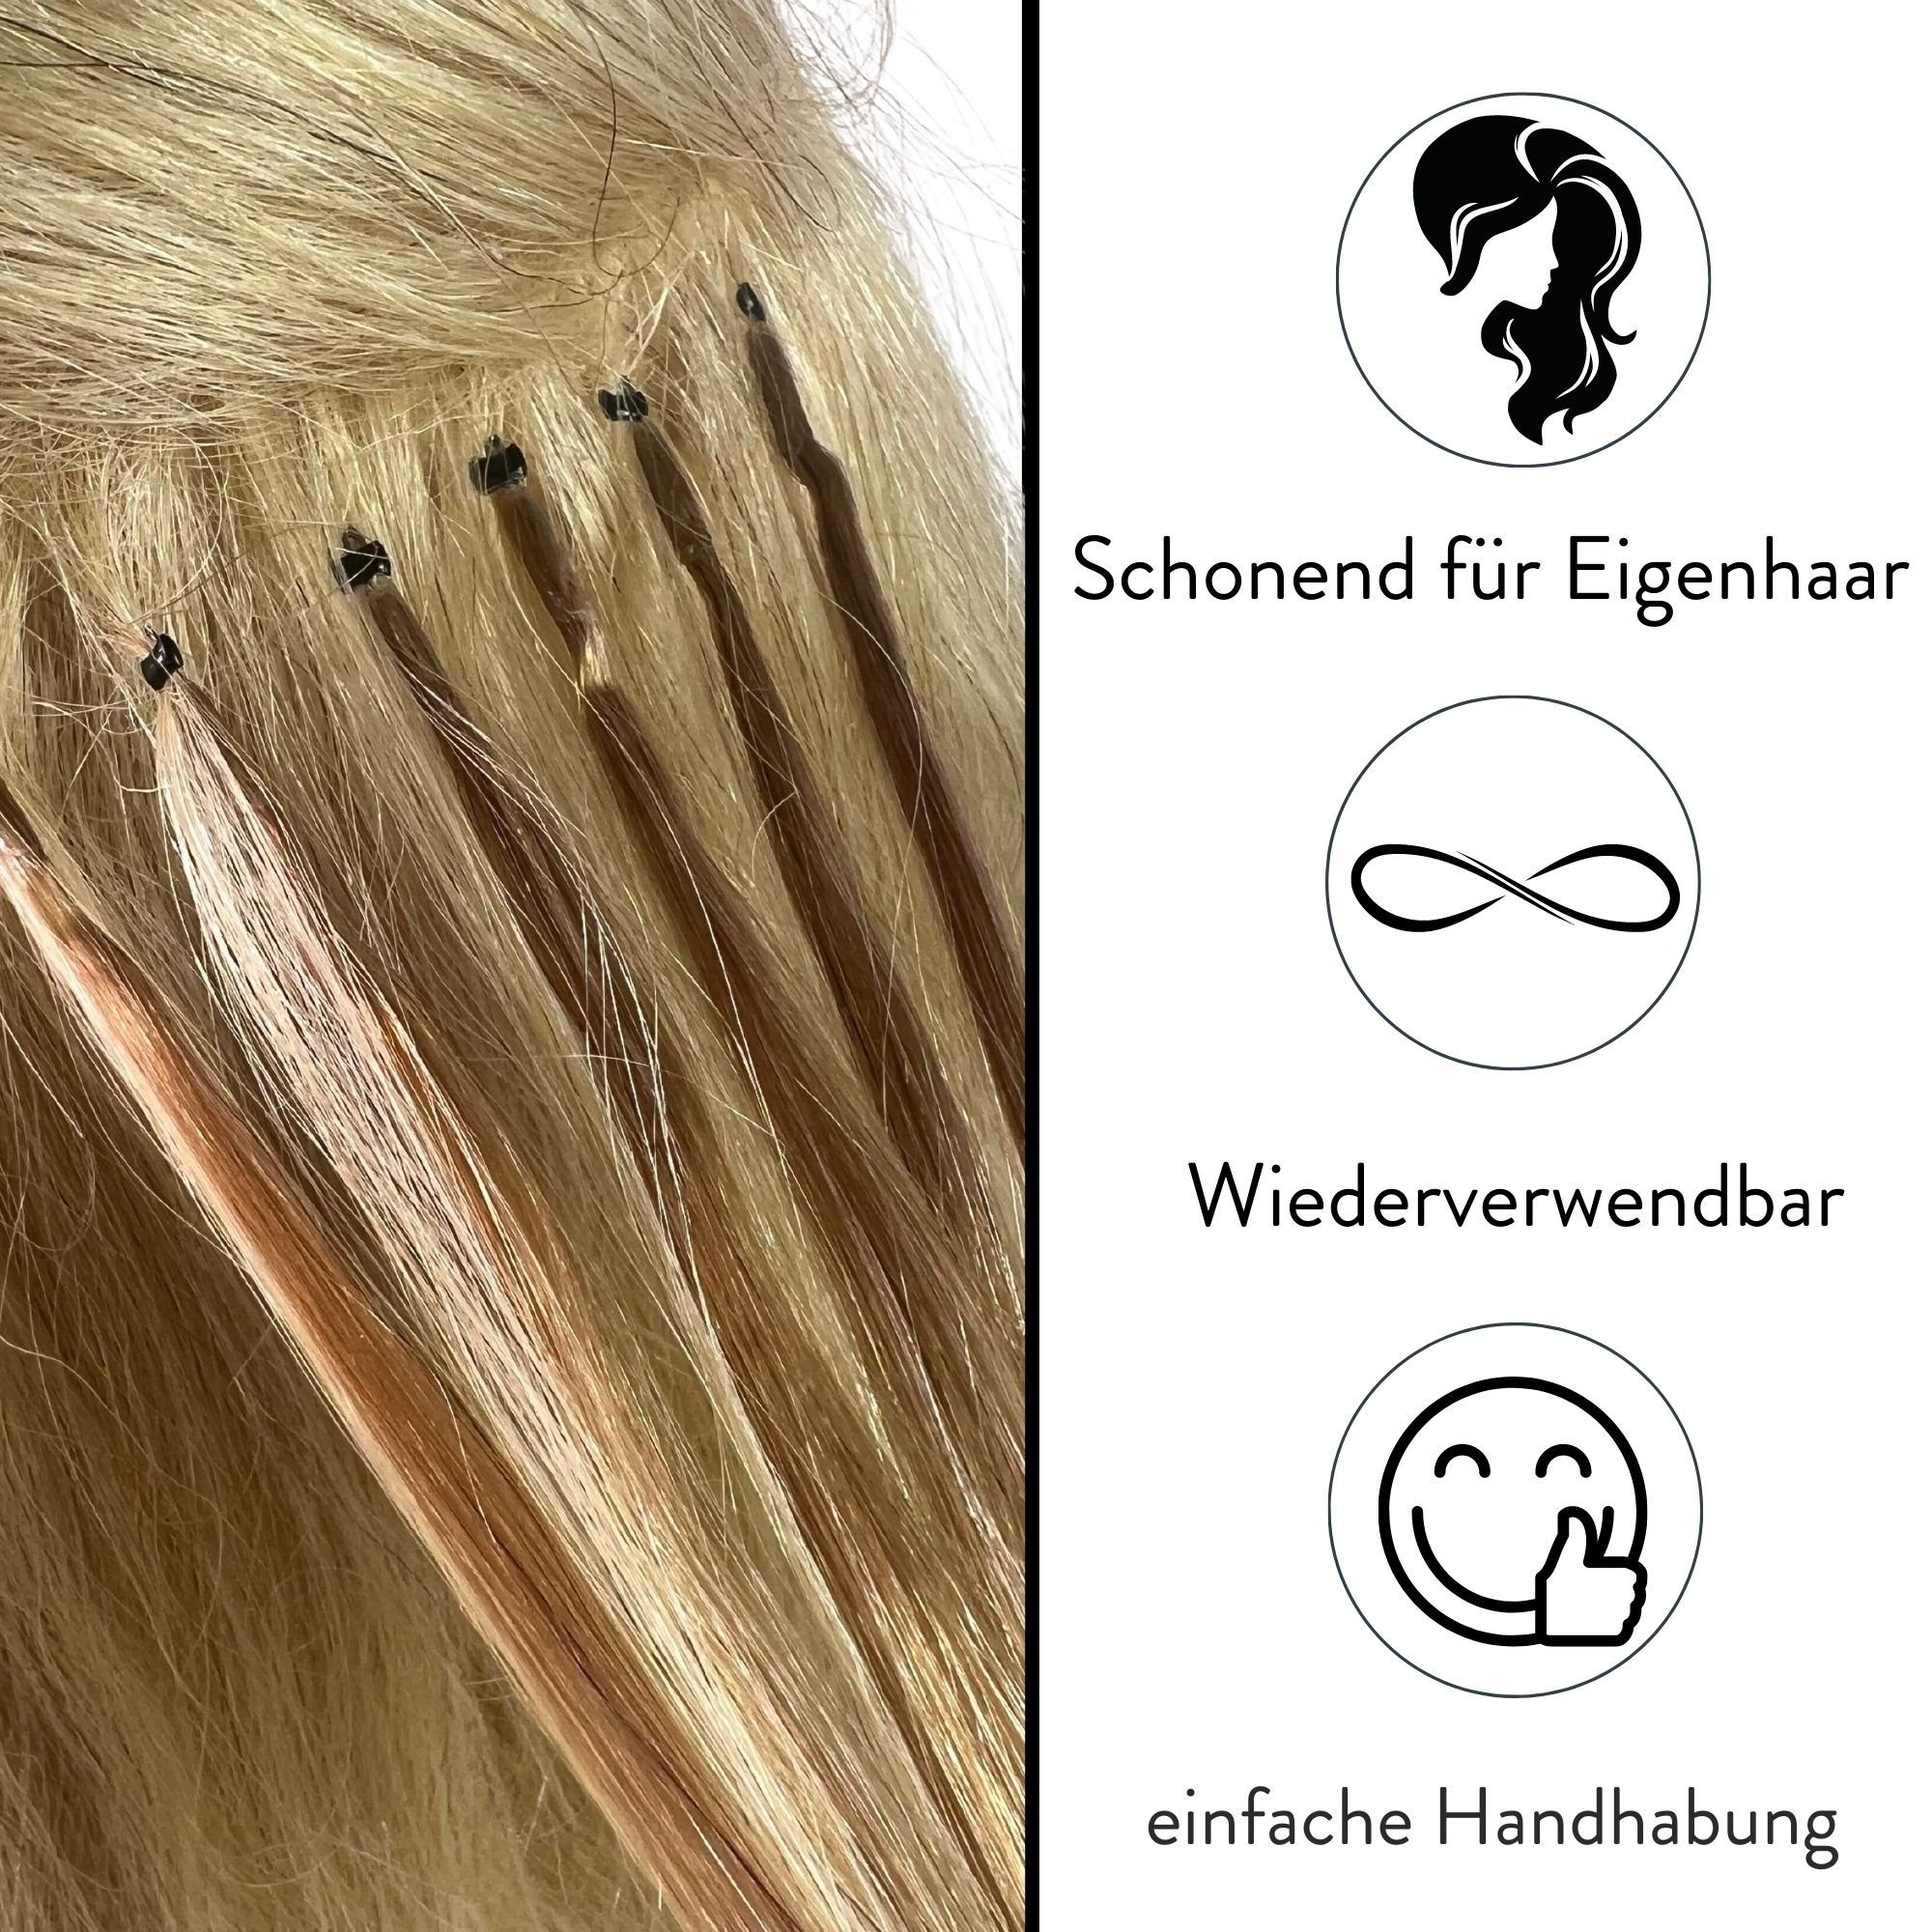 #11 mit Nanorings Echthaar-Extension Silikoneinlage hair2heart